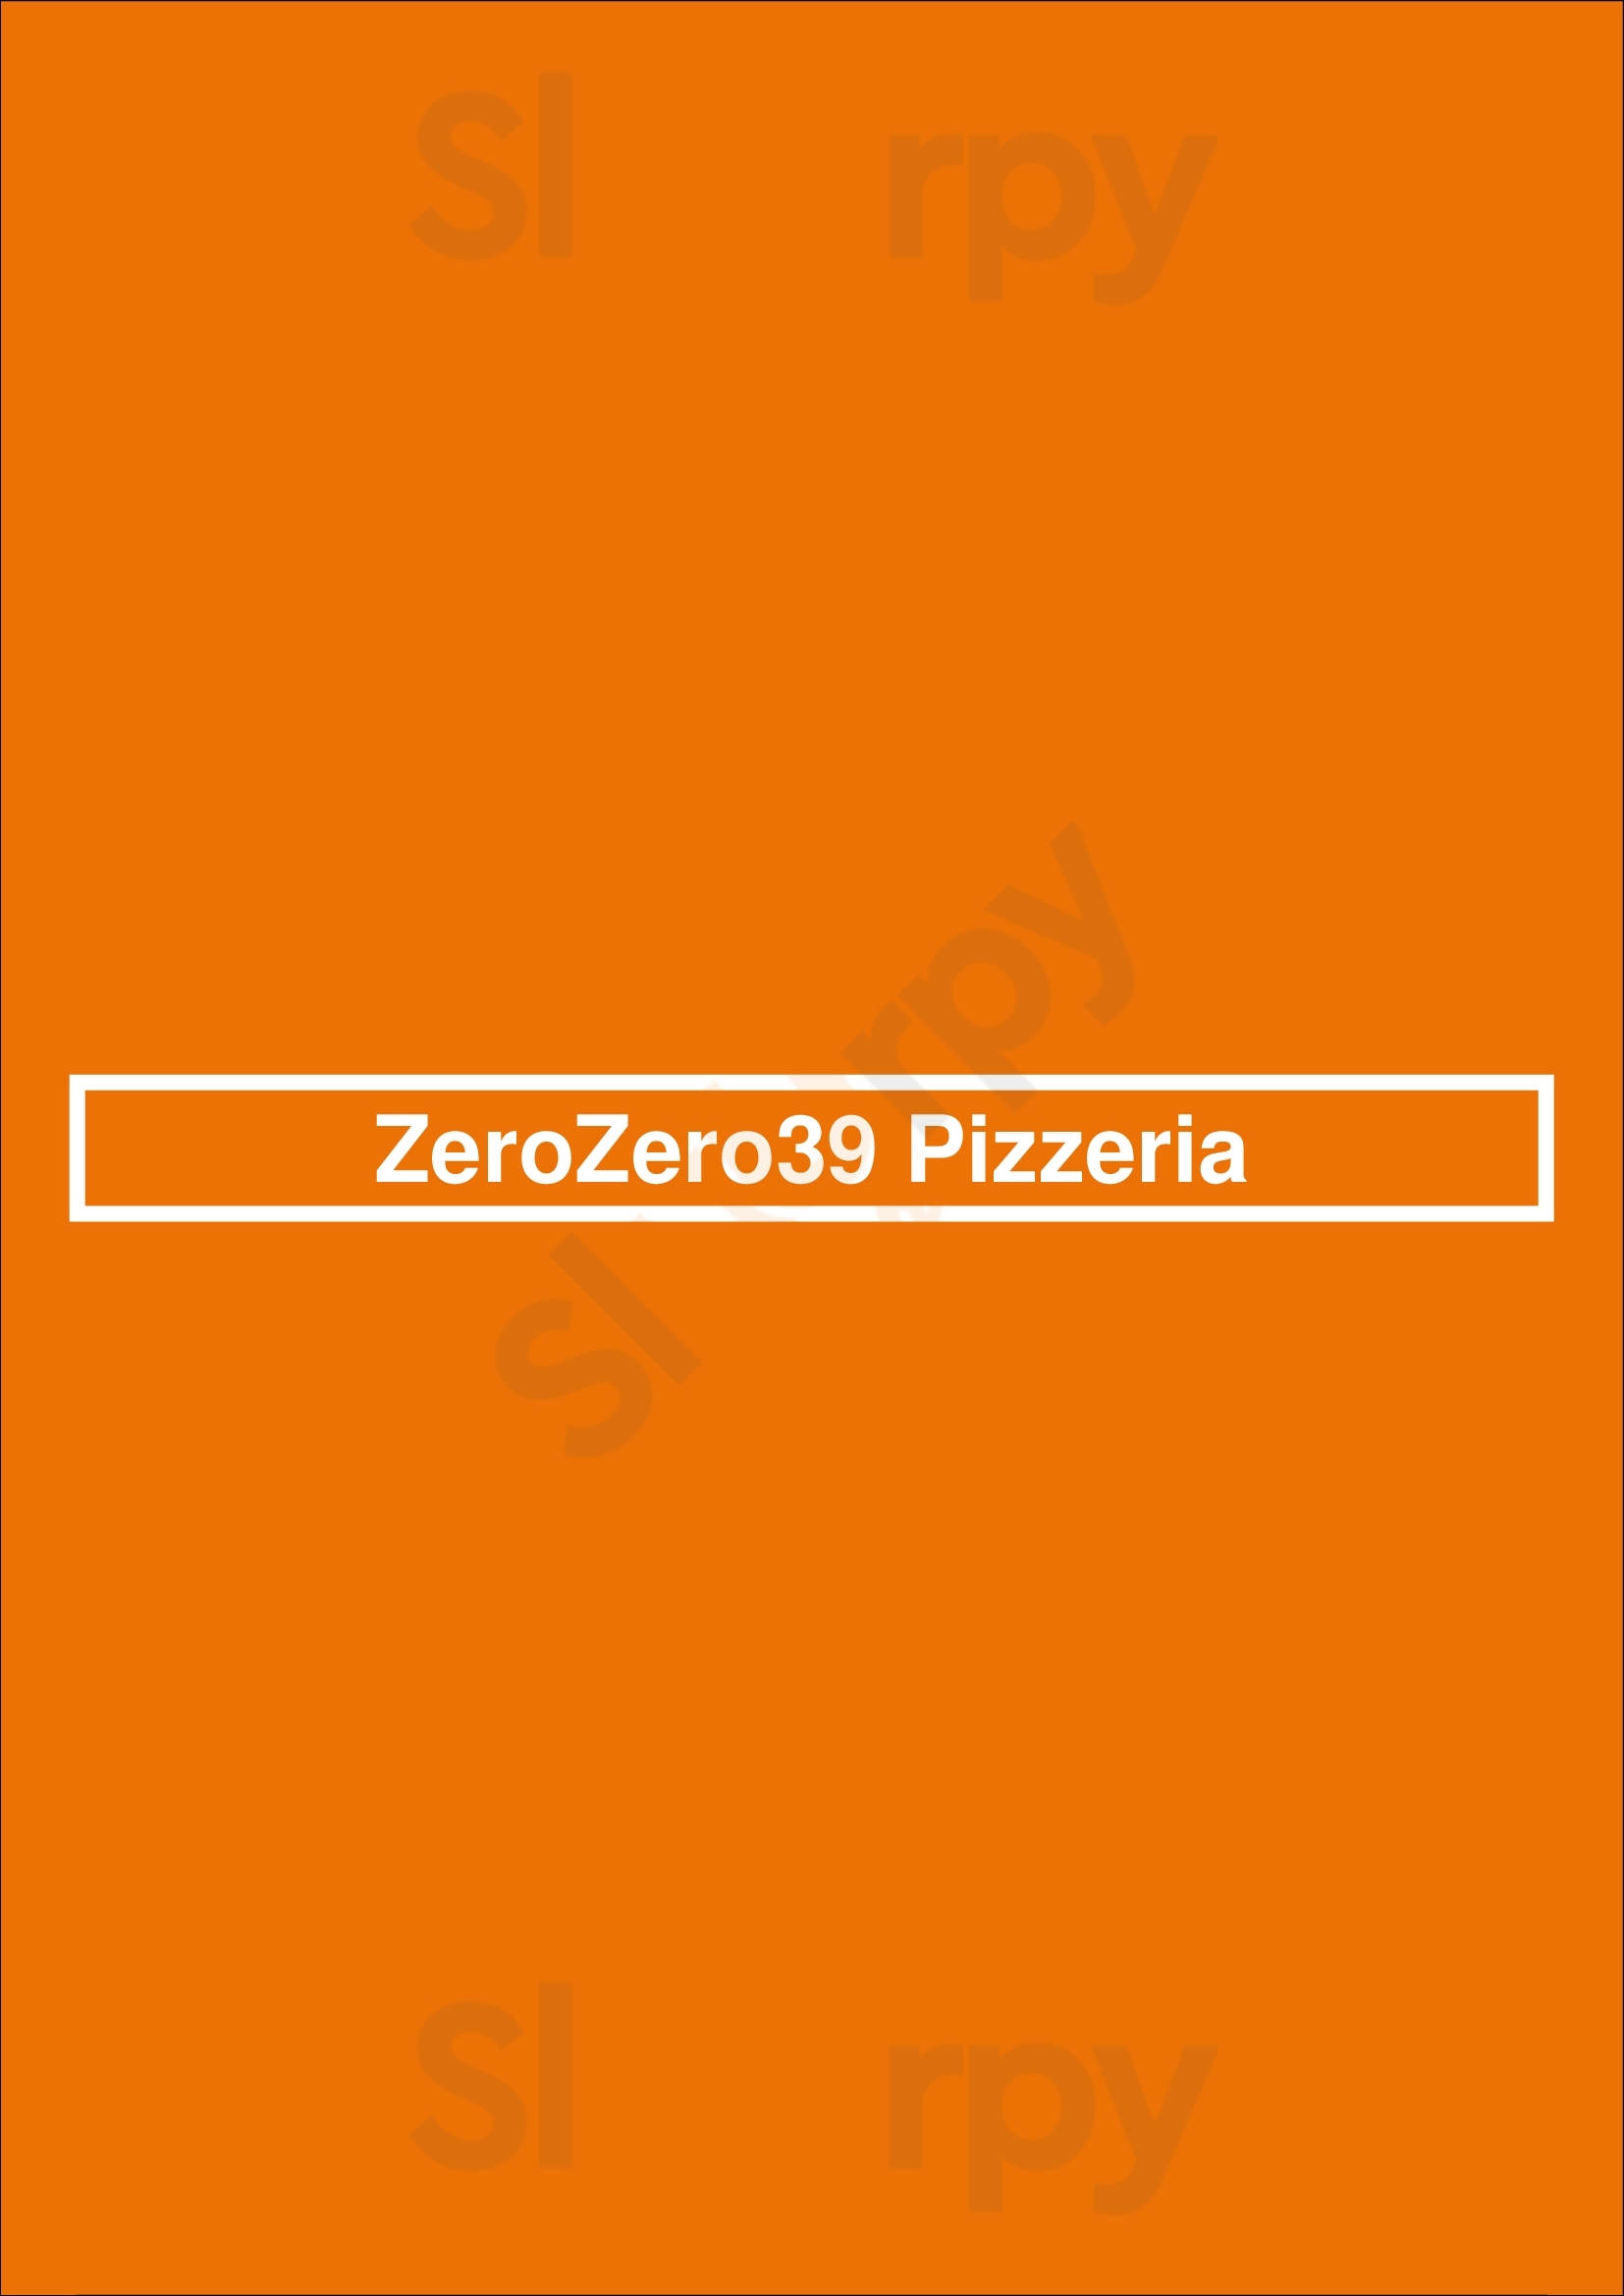 Zerozero39 Pizzeria Huntington Beach Menu - 1